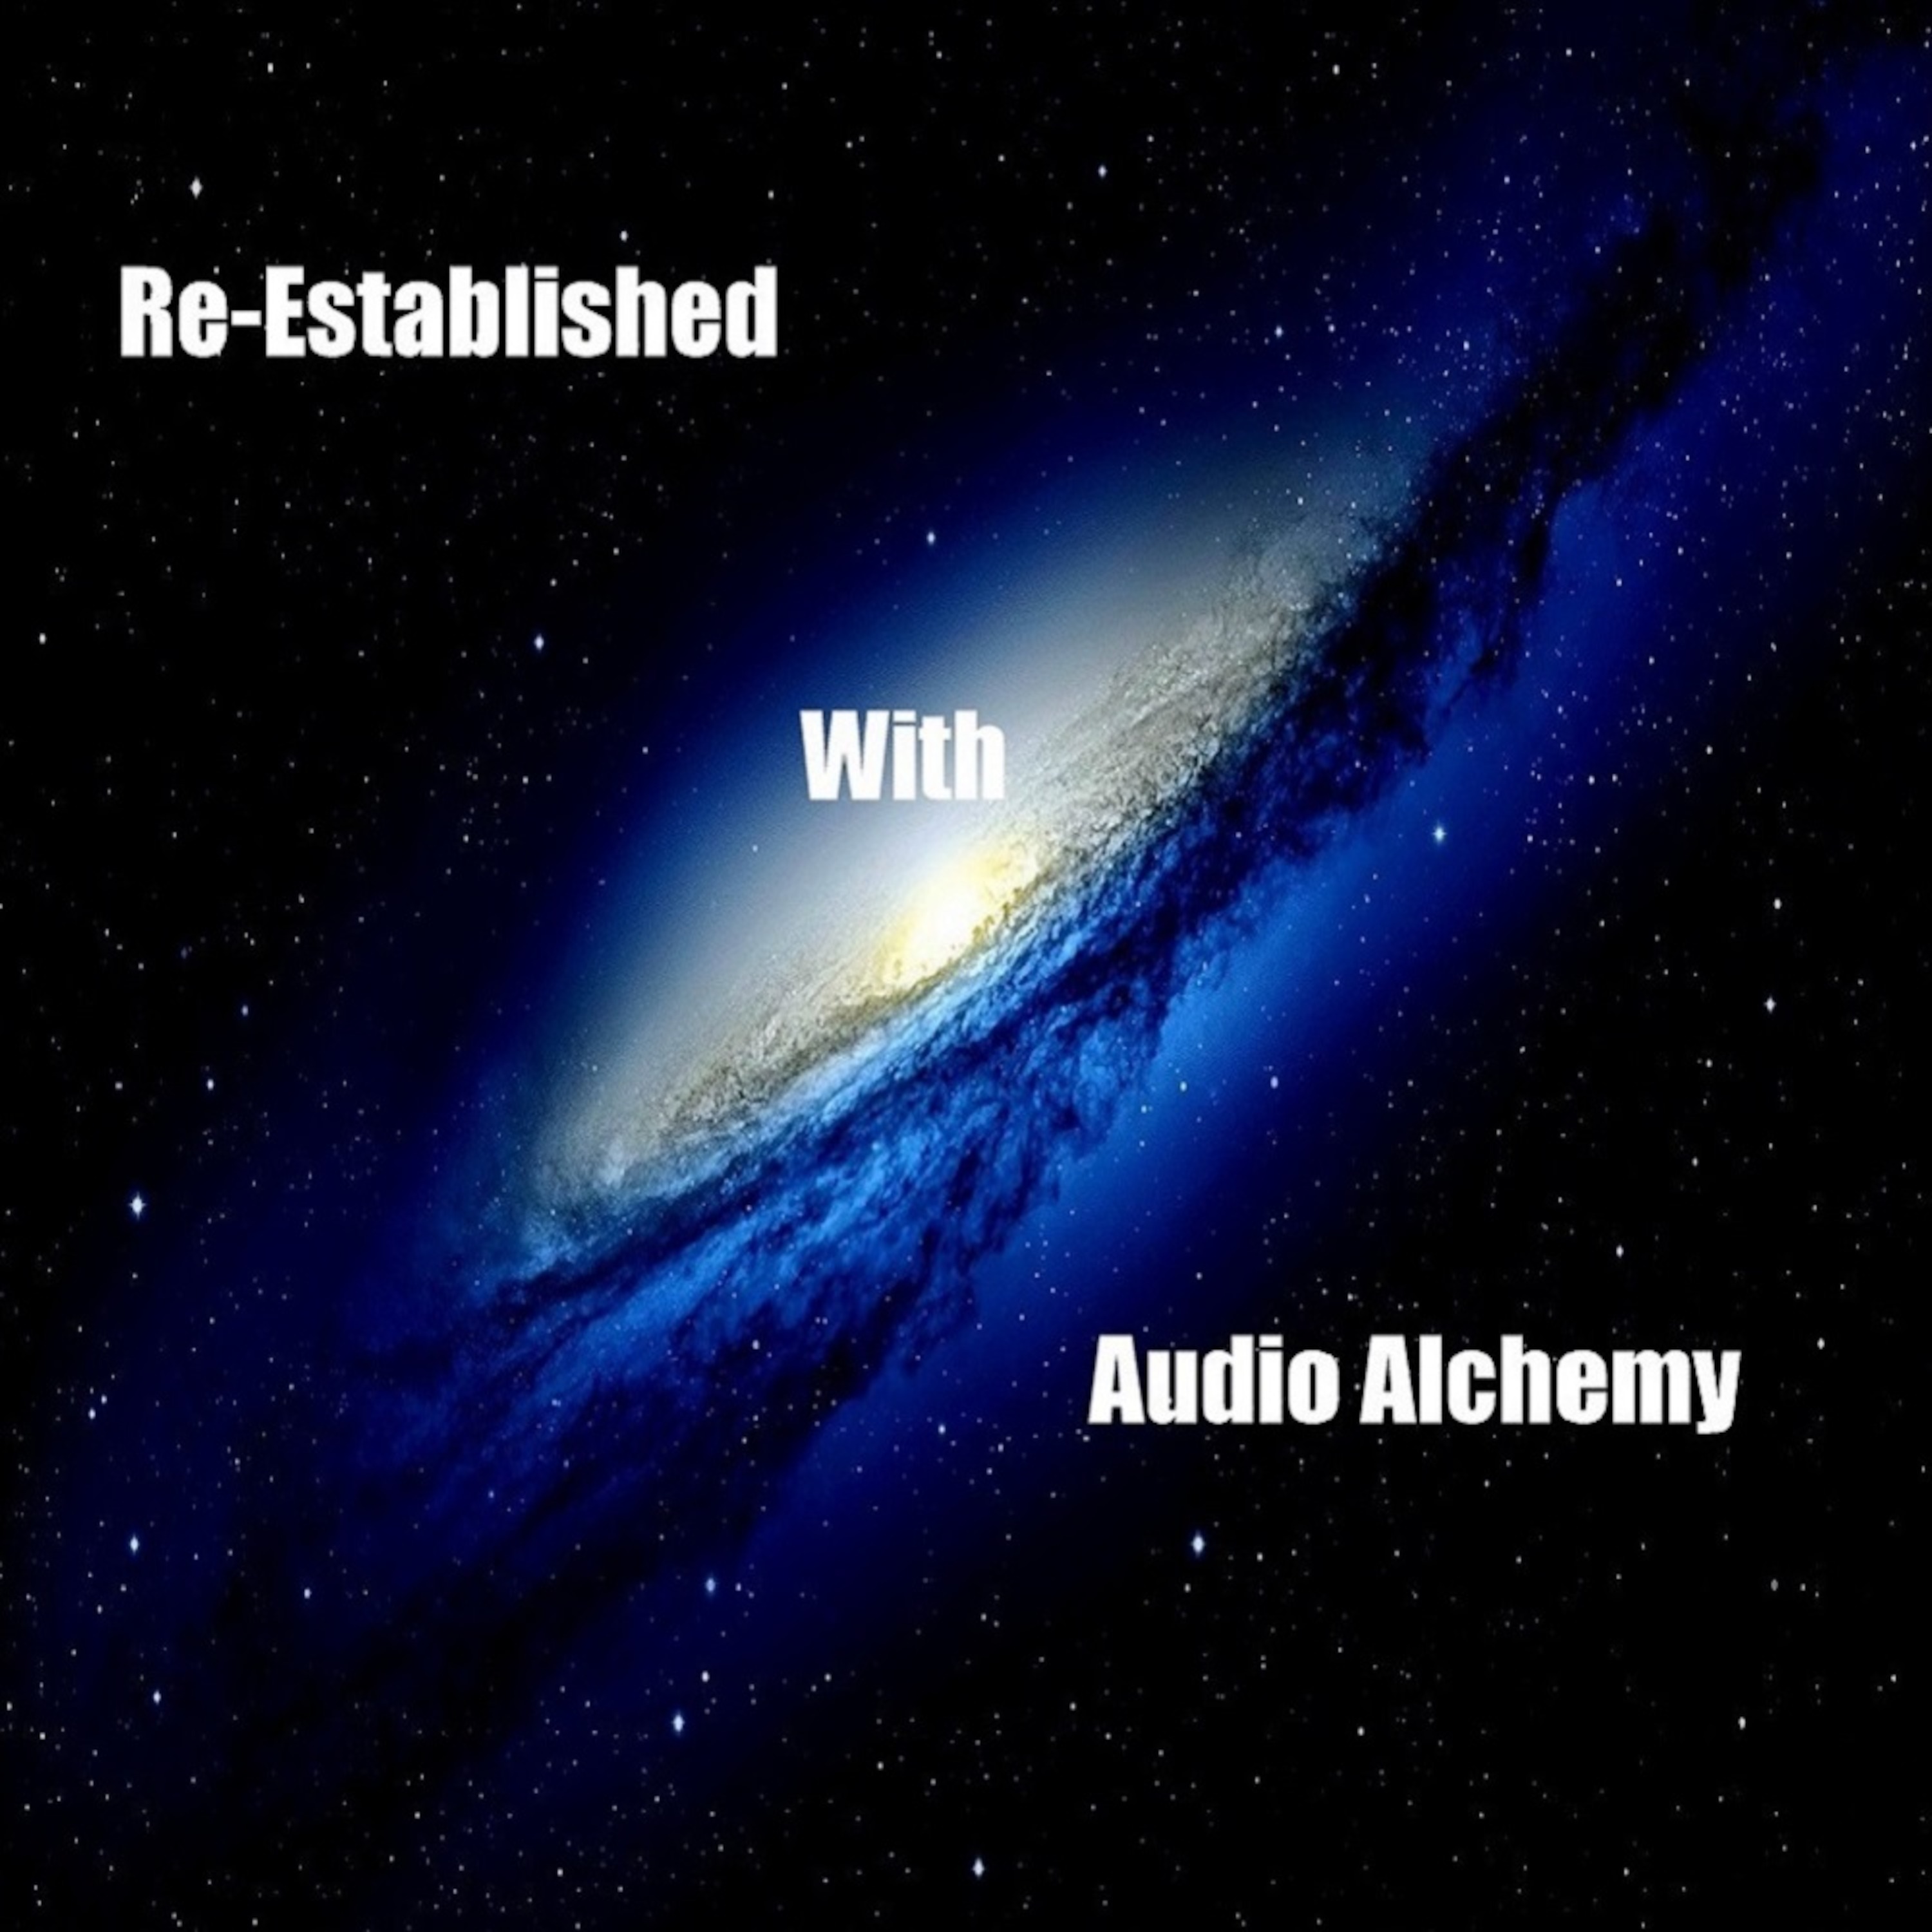 Re-Established with Audio Alchemy